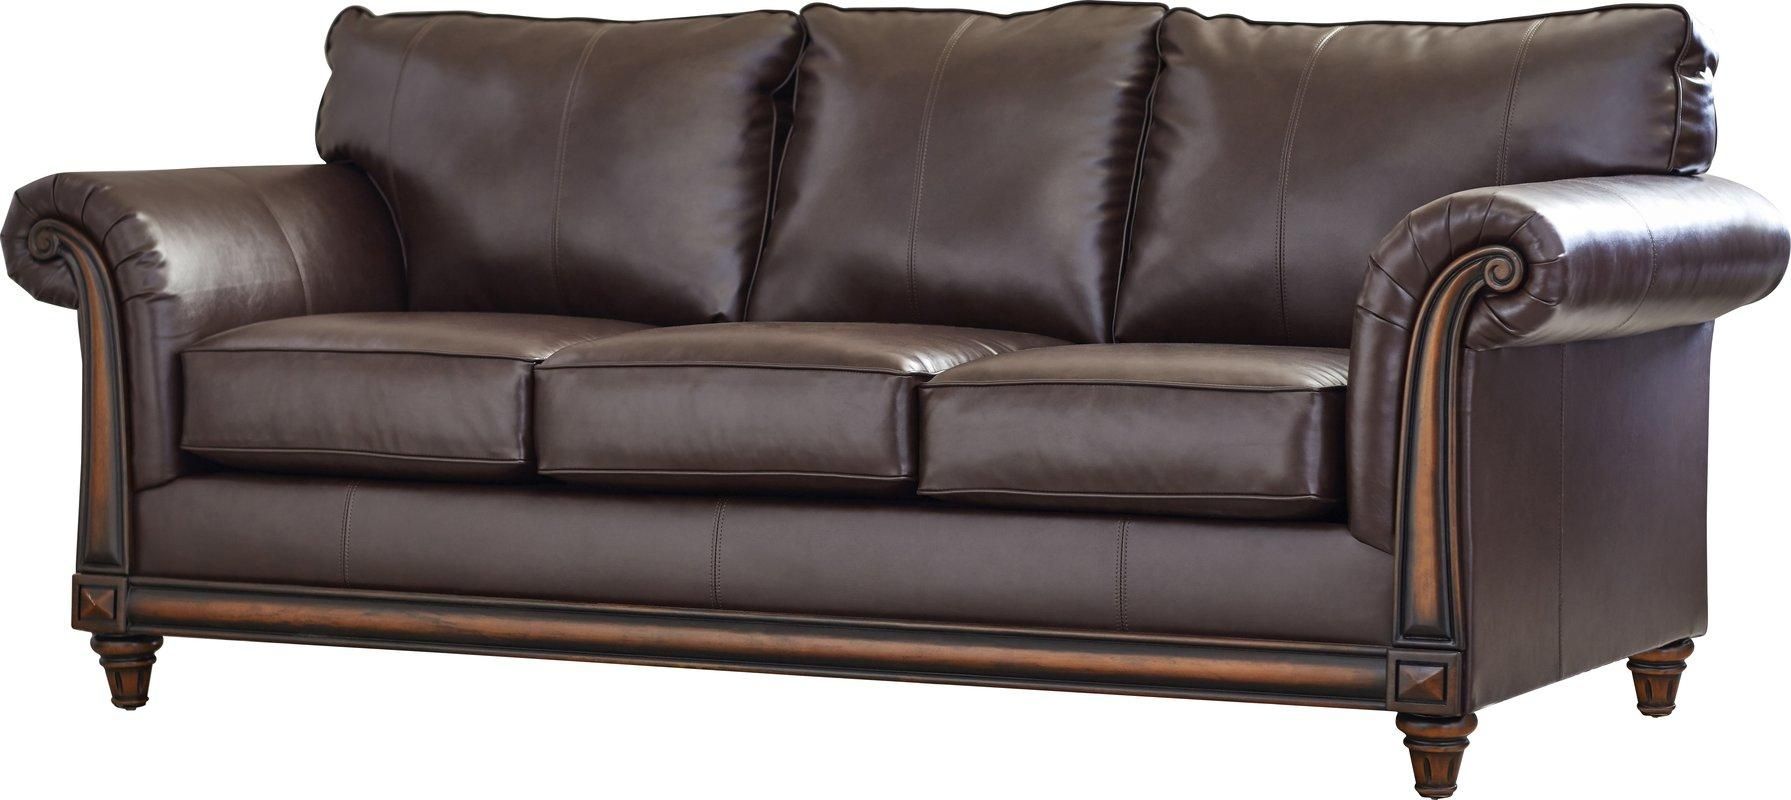 Three Posts Simmons Upholstery Duwayne Sofa & Reviews | Wayfair For Simmons Leather Sofas (View 17 of 20)